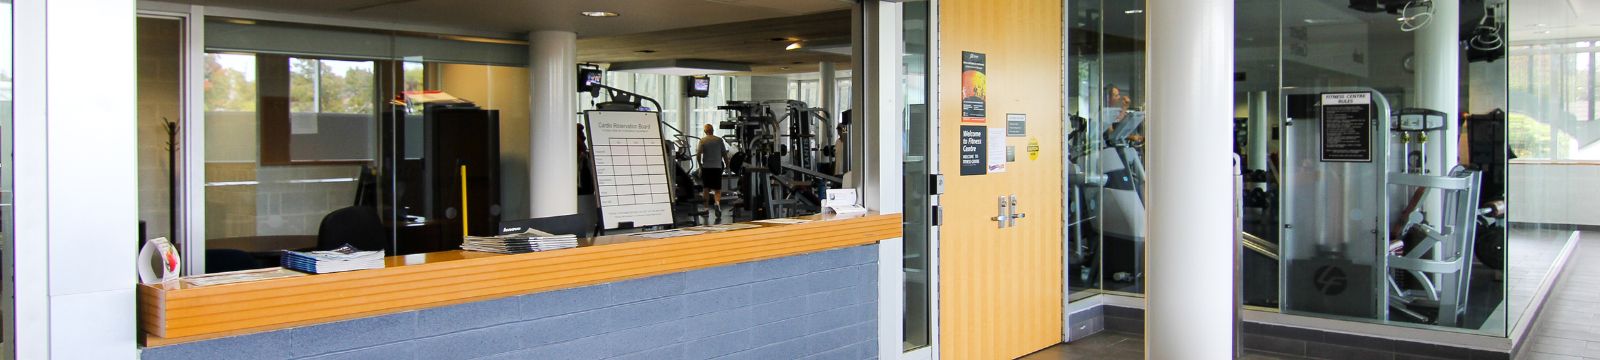 South Oshawa Community Centre Fitness Desk